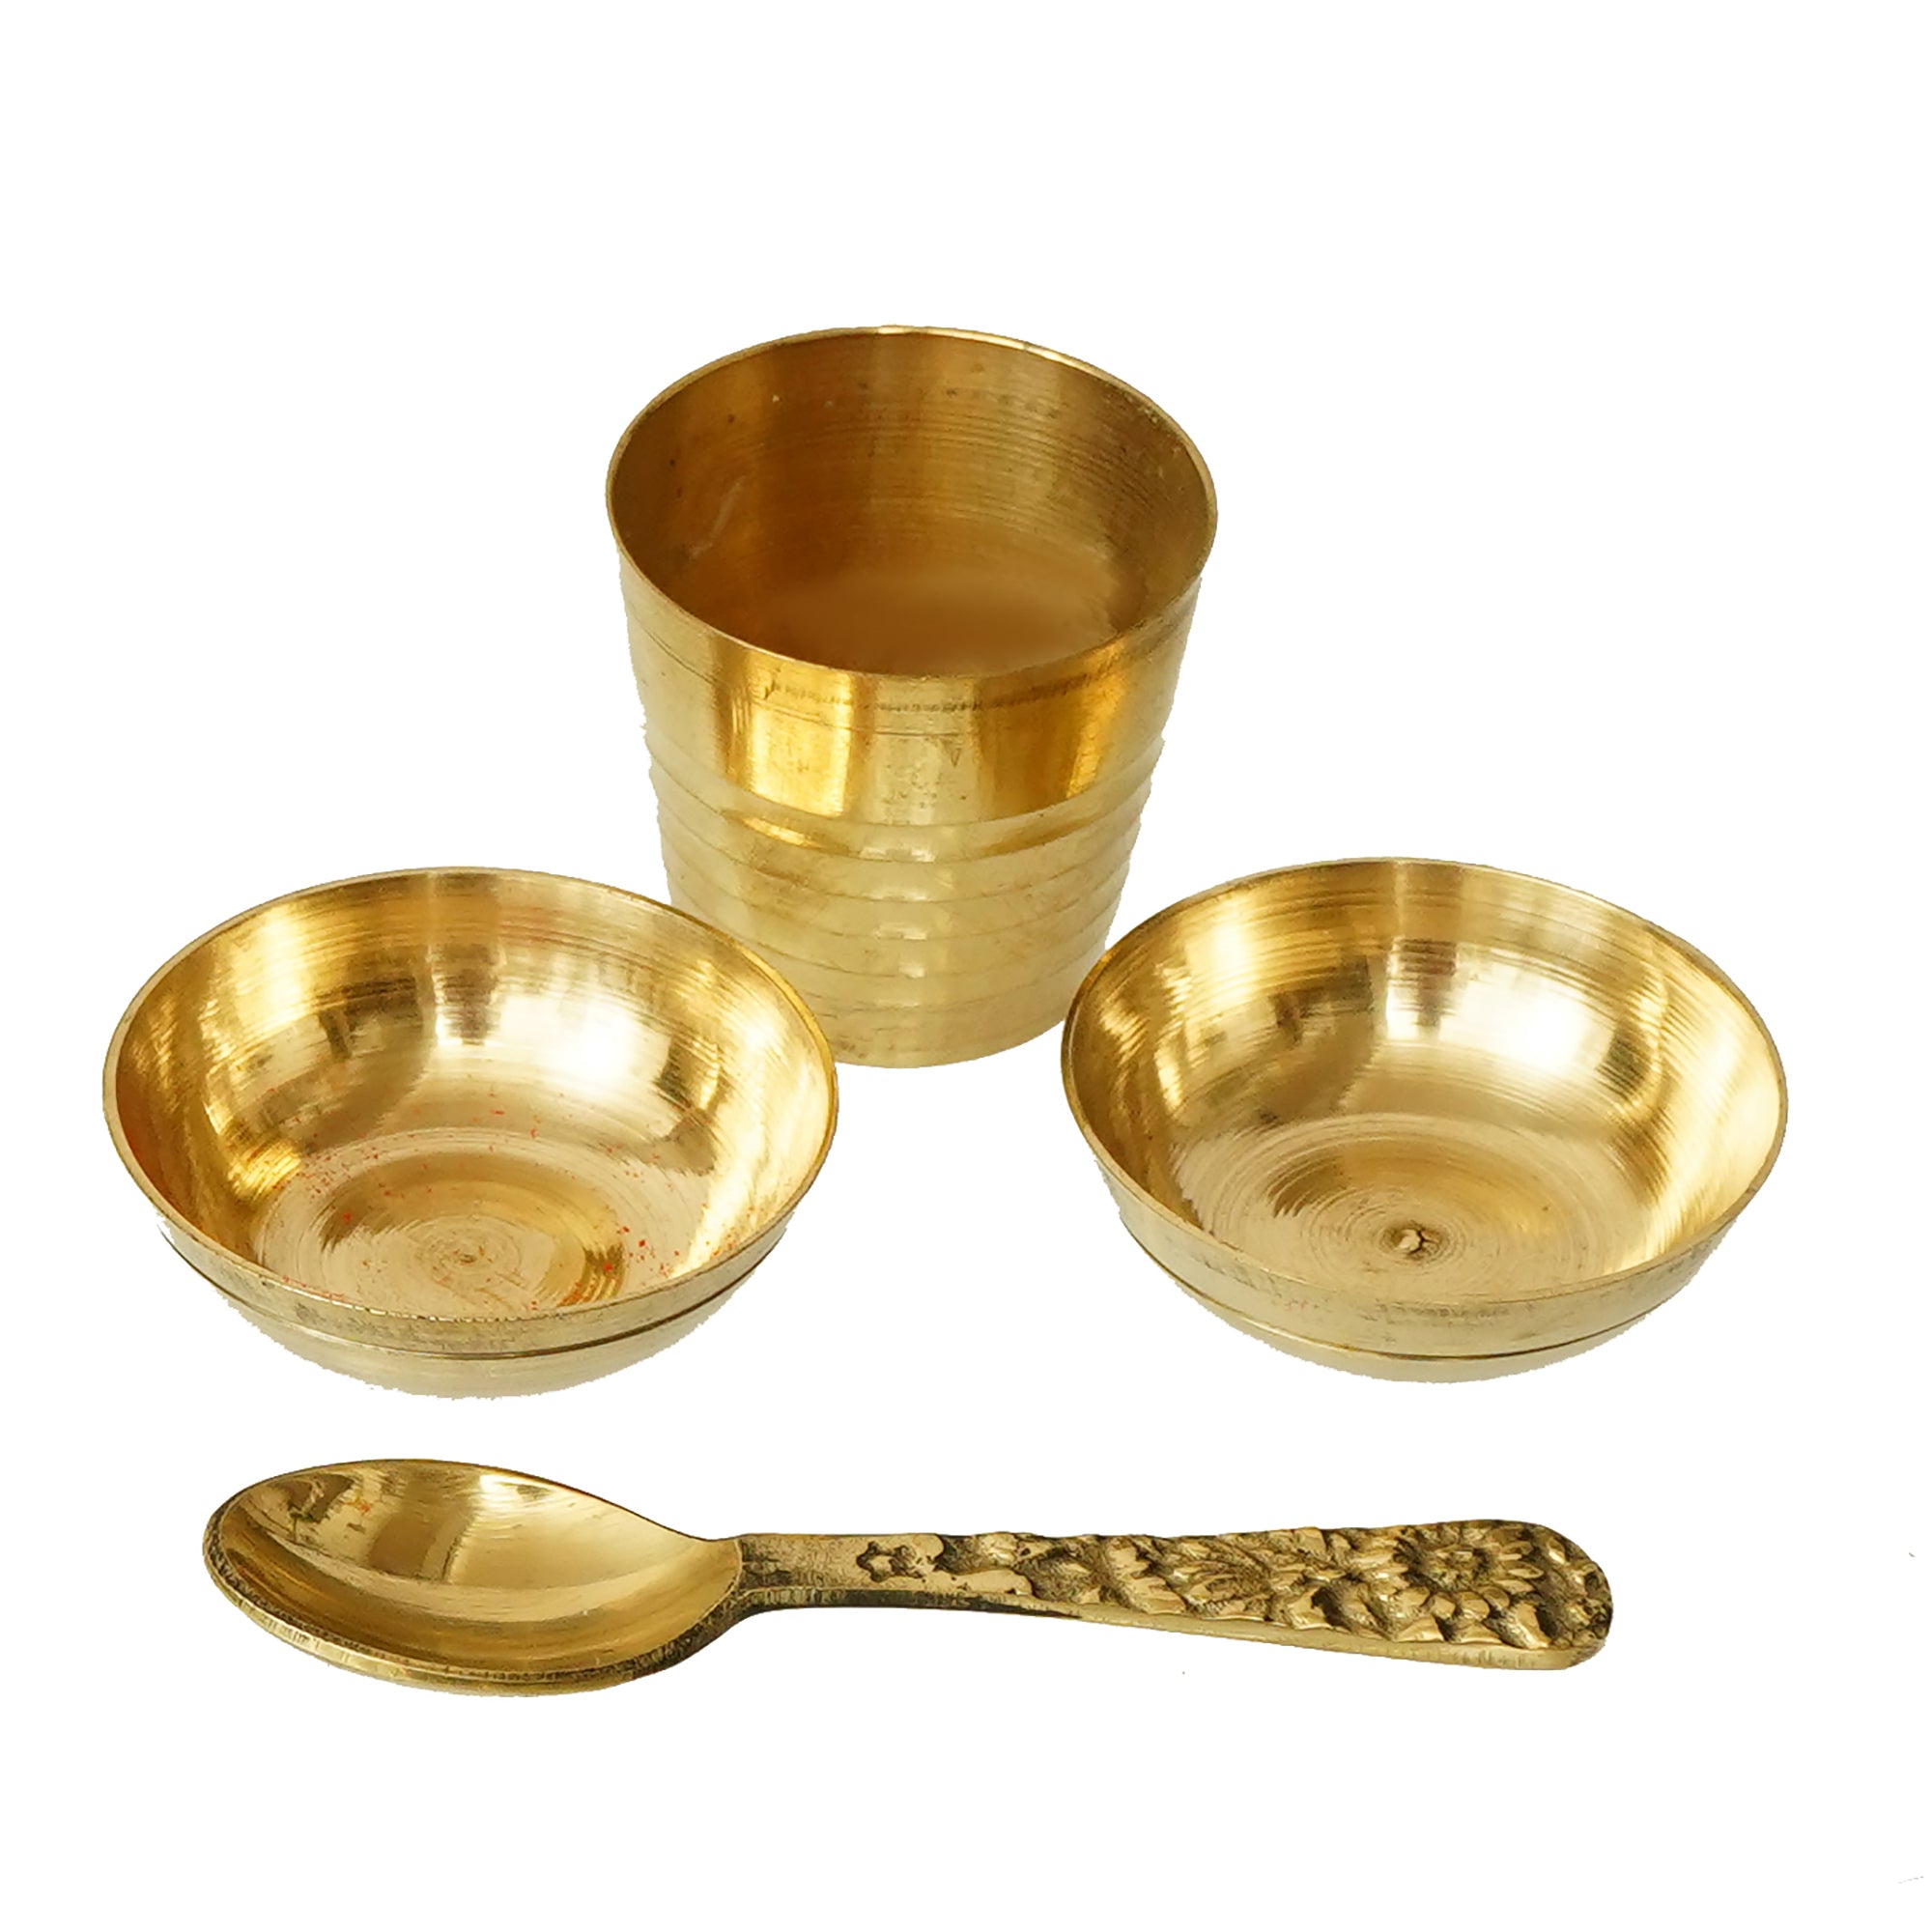 5 Inch Brass Pooja Thali with 2 Katori/Bowls, 1 Spoon and 1 Glass 5